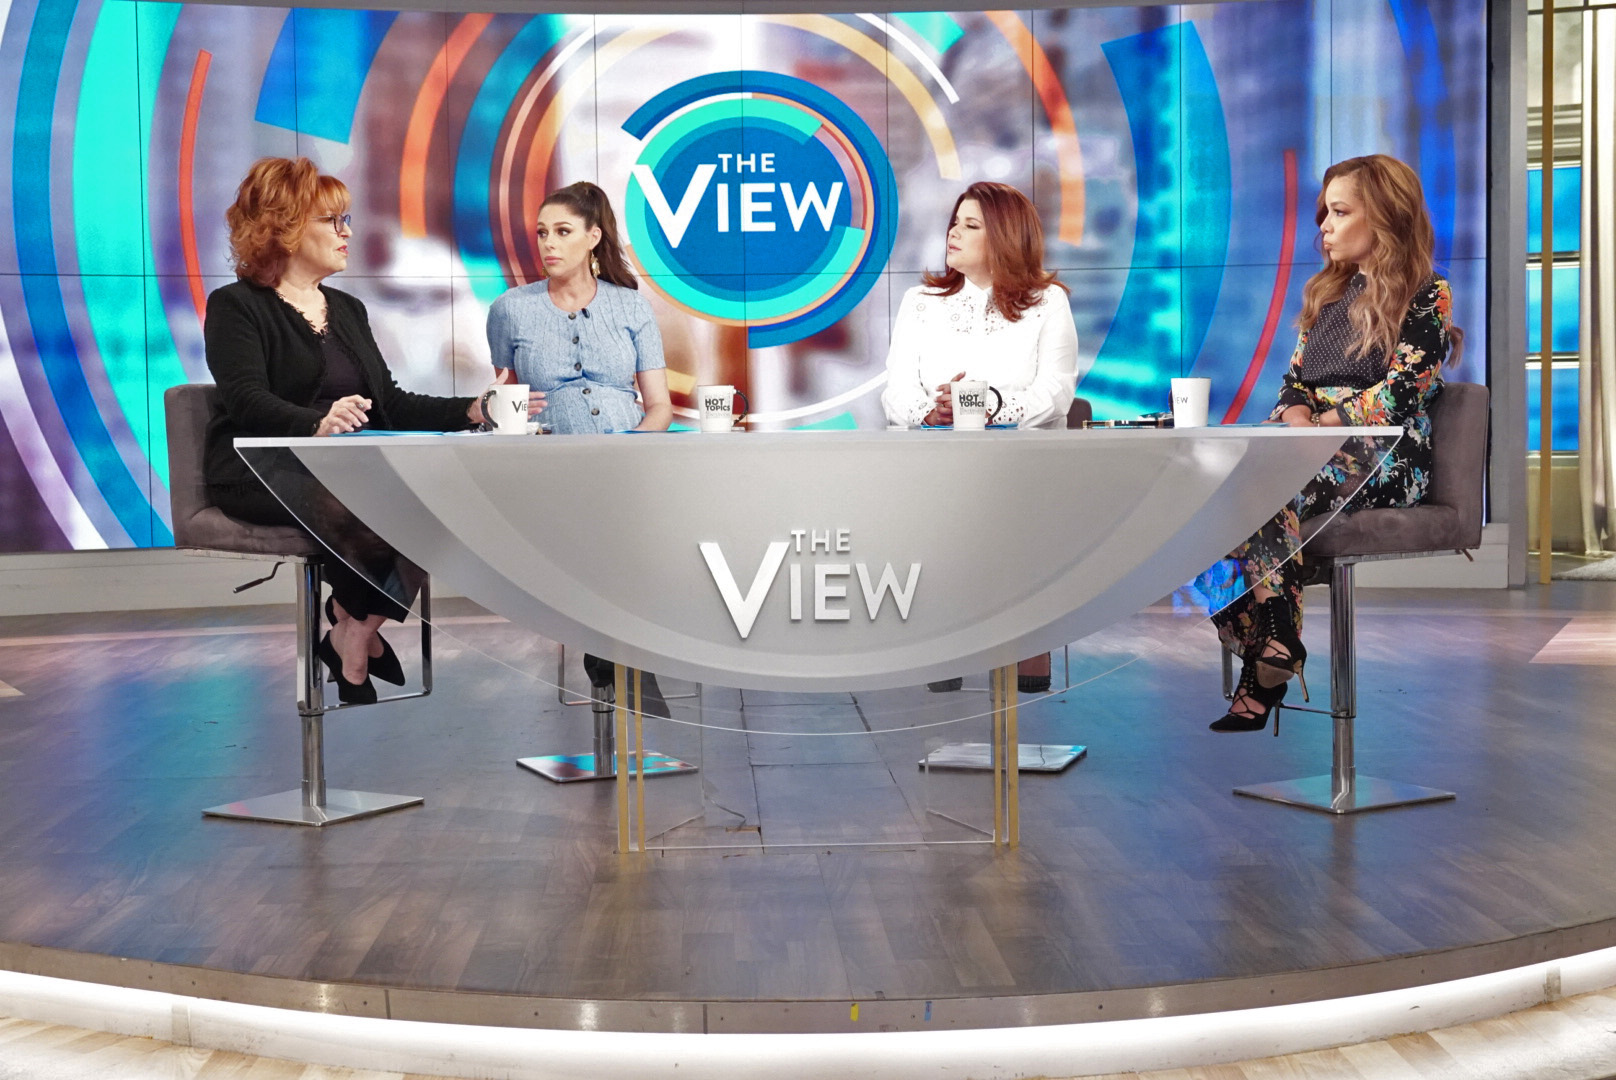 PHOTO: Joy Behar, Abby Huntaman, Ana Navarro, and Sunny Hostin discuss presidential candidates' policy versus personality on "The View" Monday, Mar. 11, 2019.